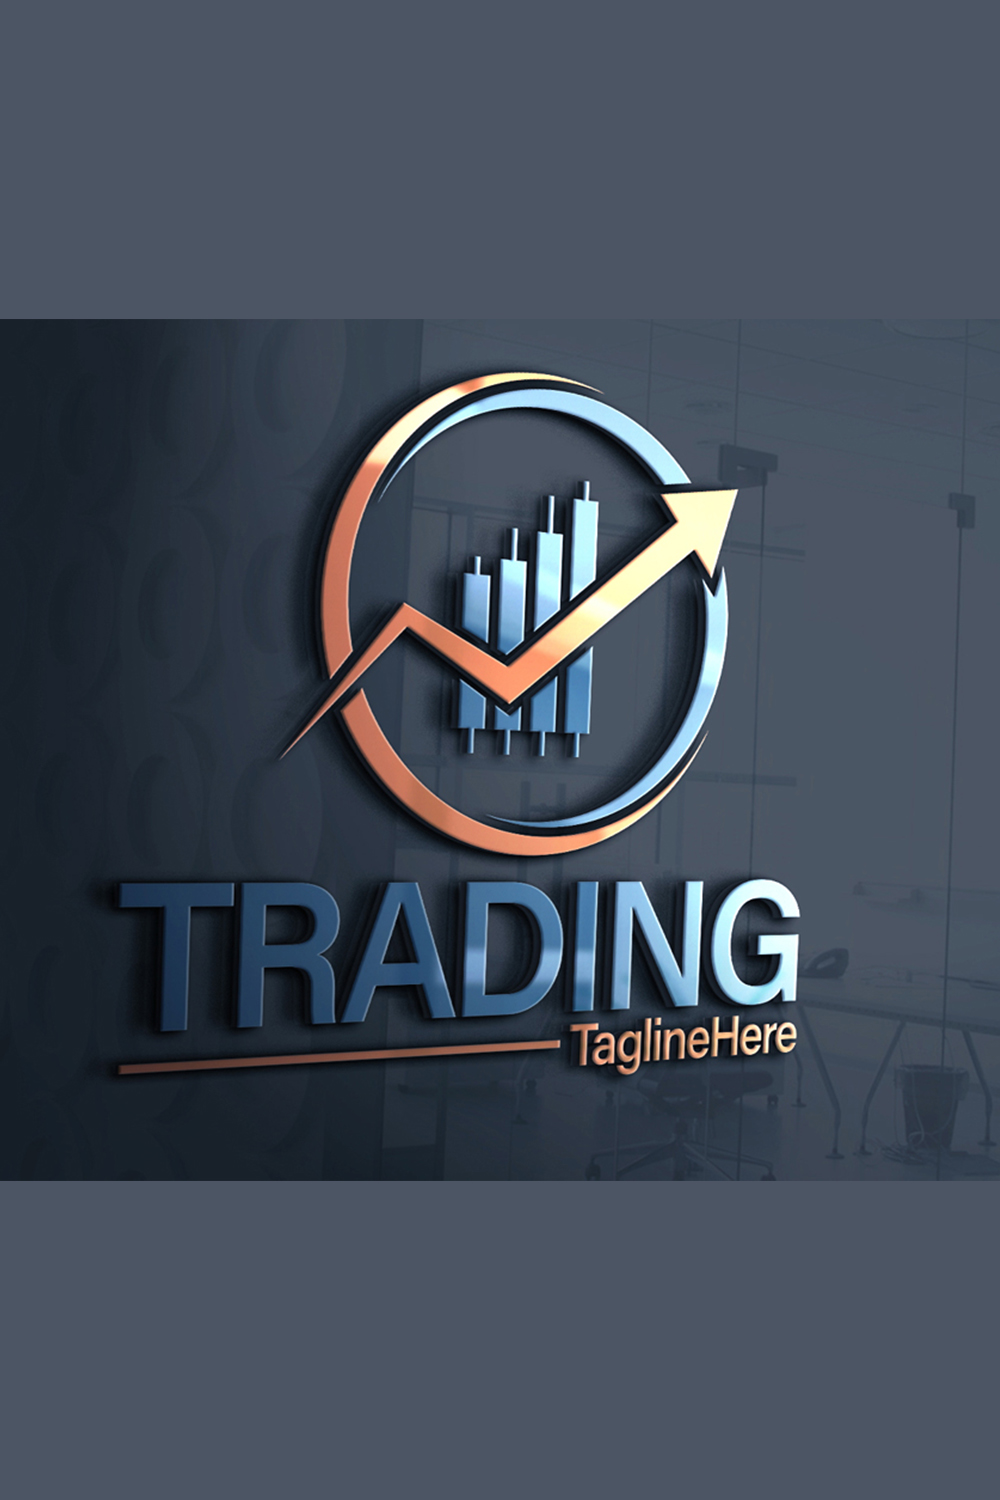 Premium Trading Logo Design Kit - 100% Editable & SEO-Optimized pinterest preview image.